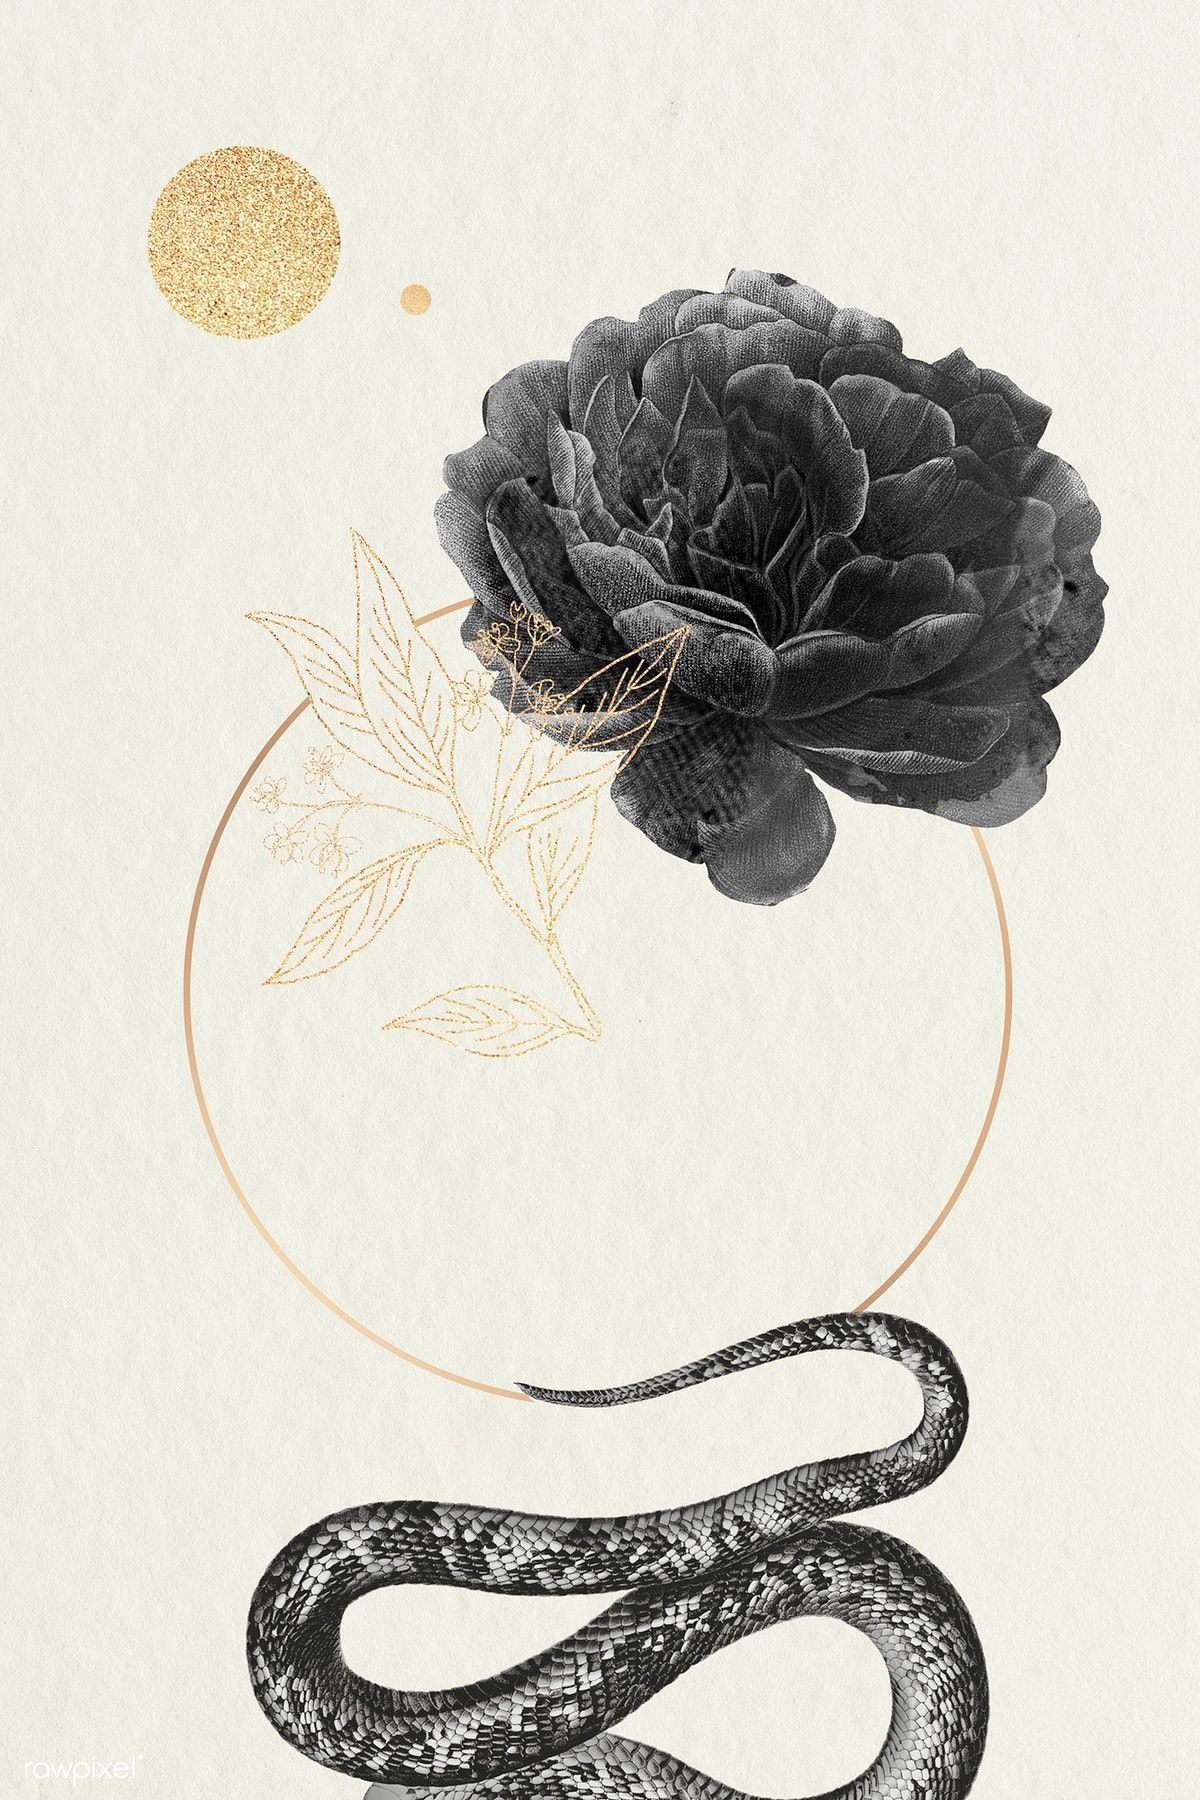 Download premium vector of Black rose, snake and a golden circle - Snake